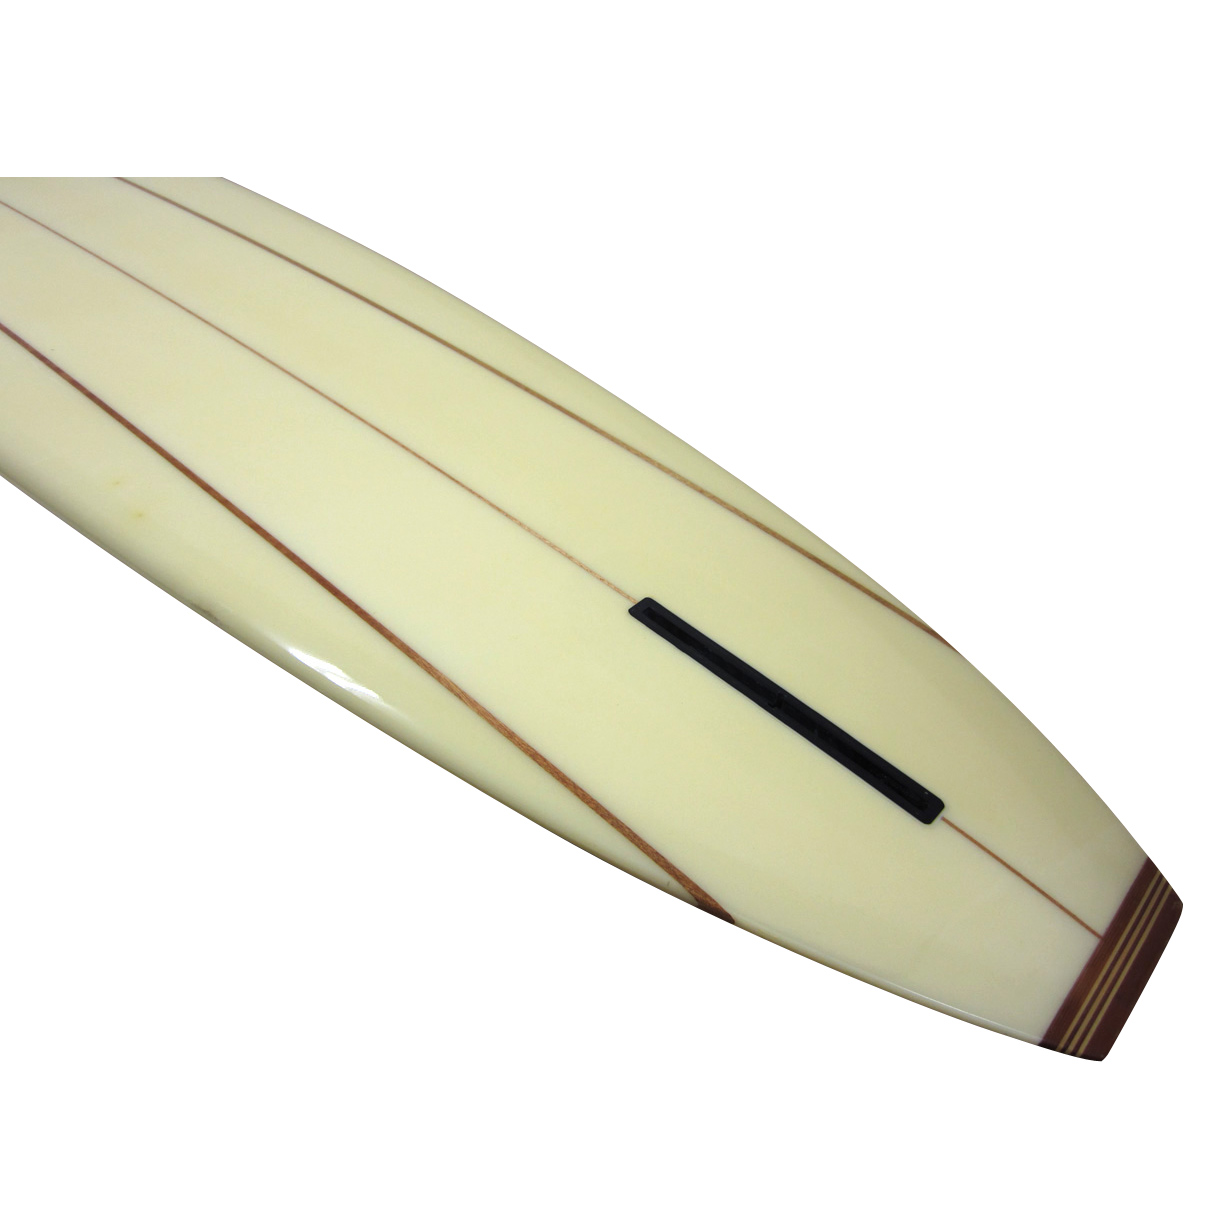 Surfboard Hawaii / 9`6 Glider Special Clark Form Shaped By HANK BYZAK 